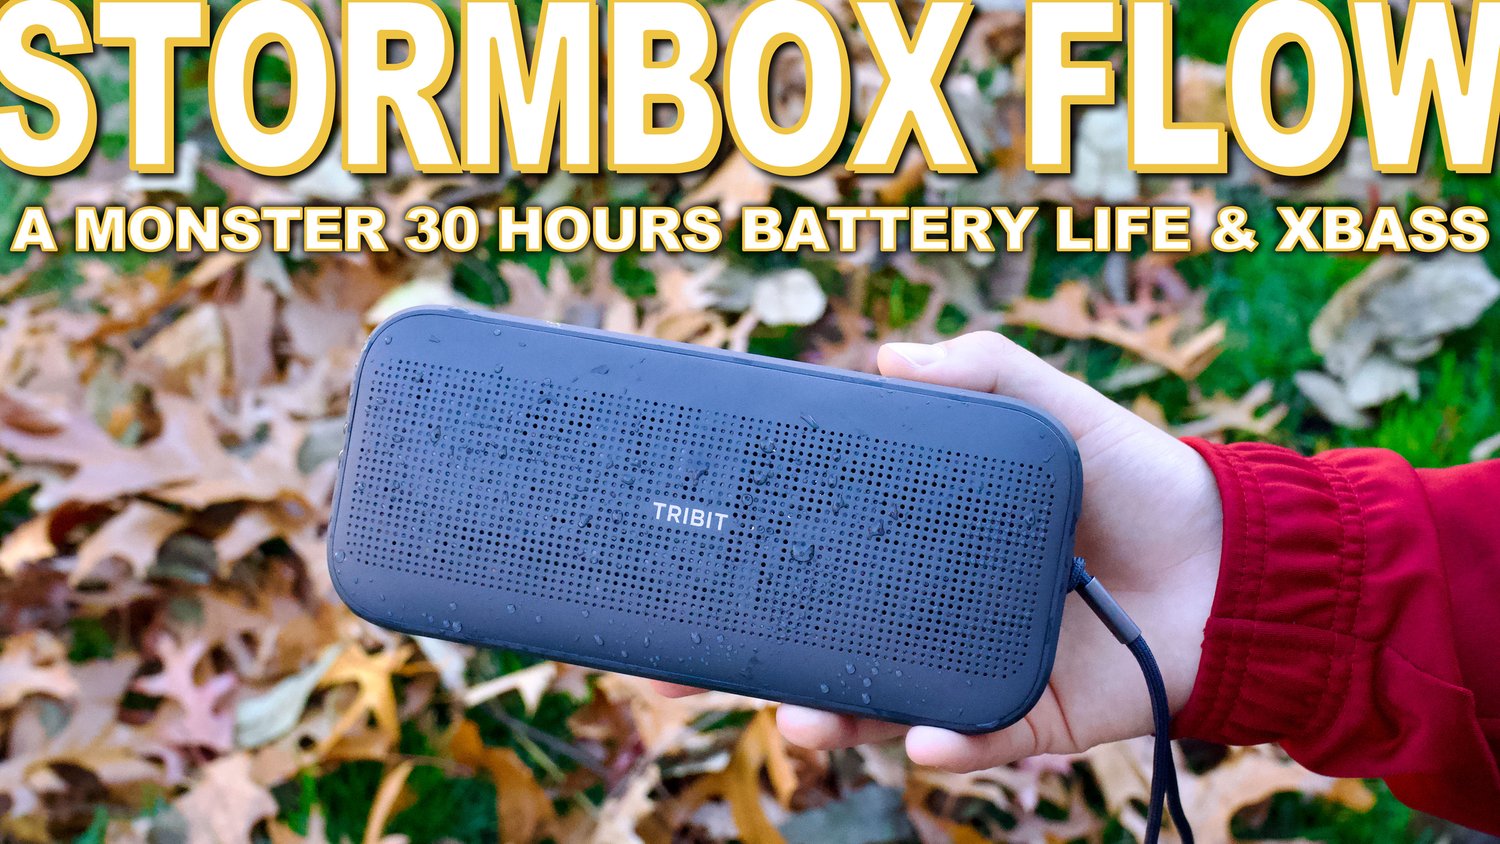 JBL PartyBox On-The-Go – profoundly loud portable parteé (review)